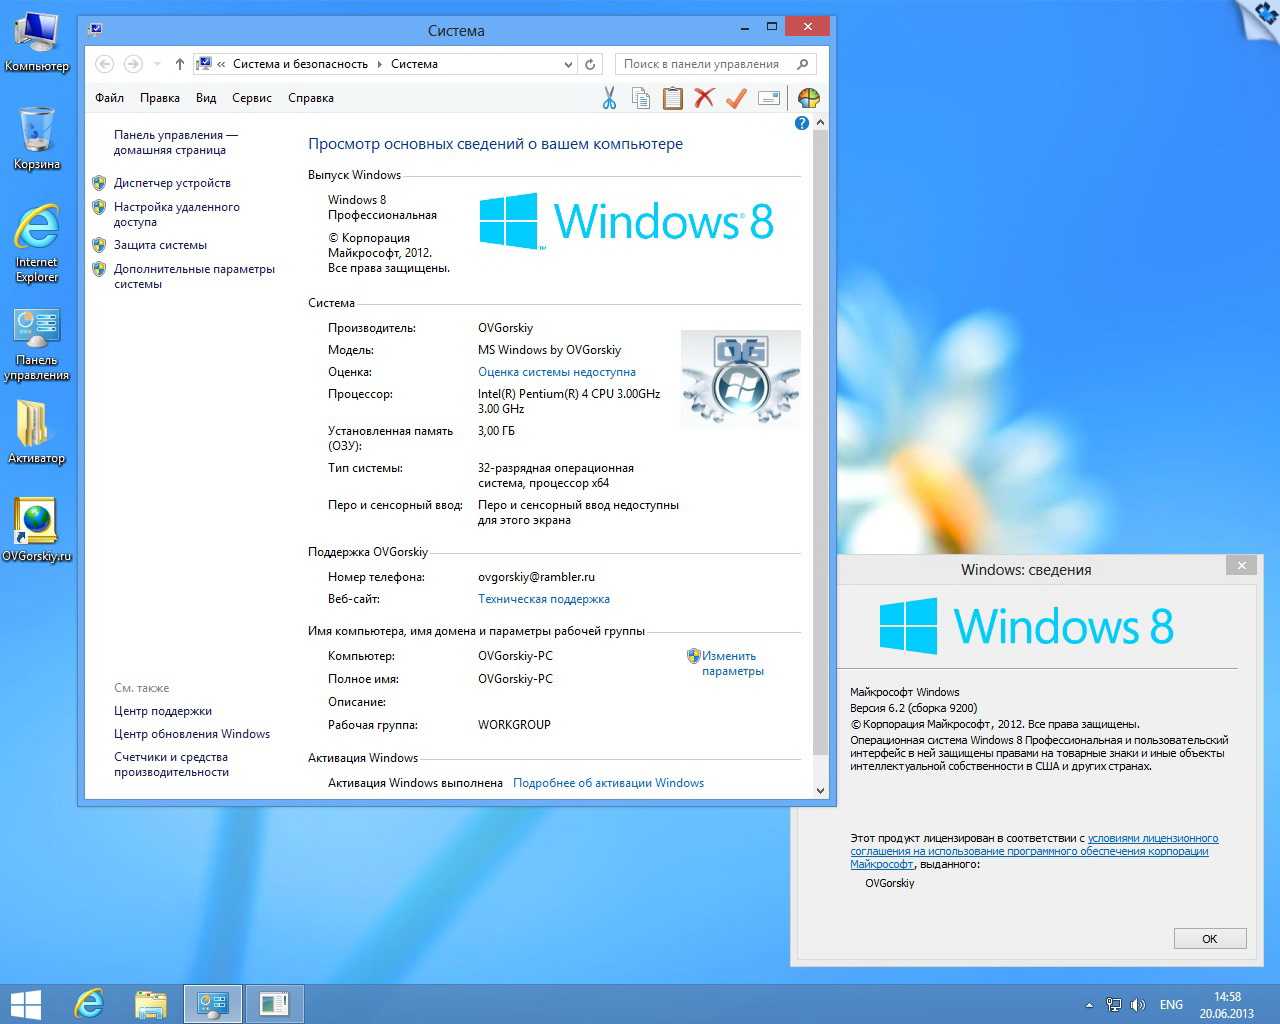 Windows 8.1 64 bit драйвера. Операционная система Windows 8. Виндовс 8 64. Windows 8 professional x64. 64-Разрядная Операционная система, процессор x64.